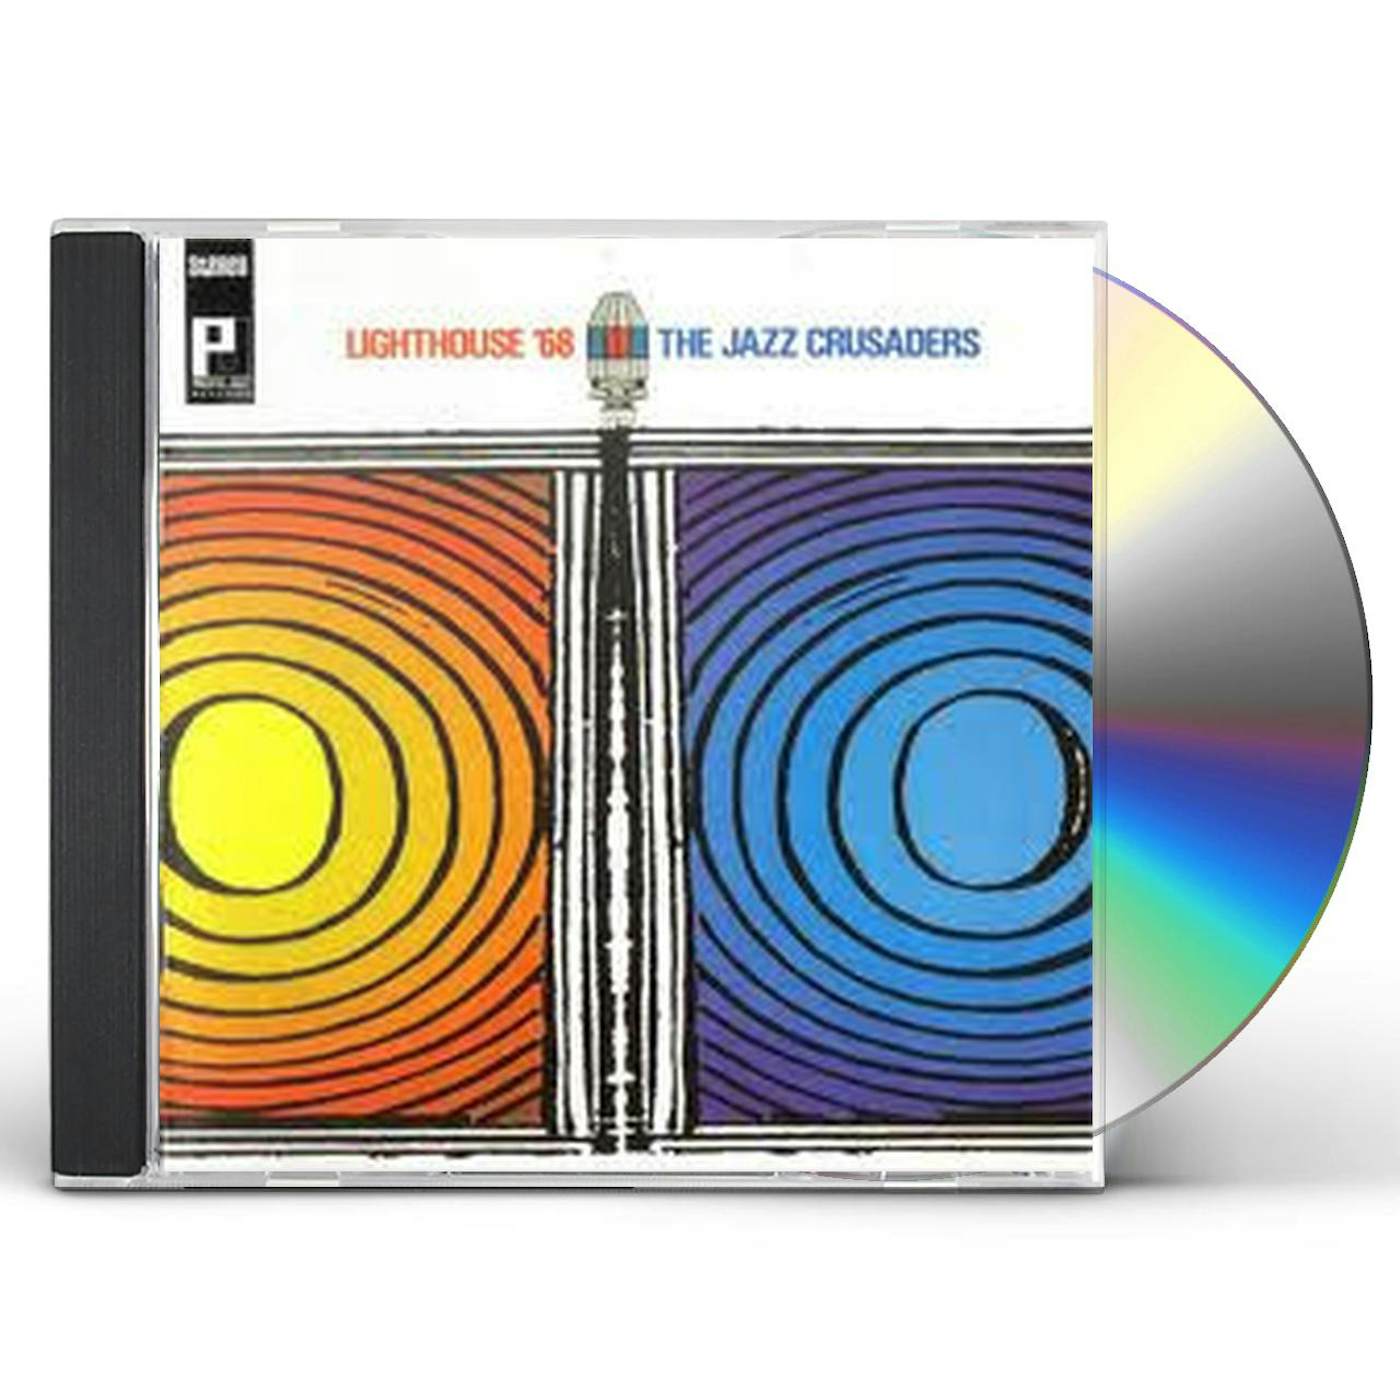 Jazz Crusaders LIGHTHOUSE 68 CD